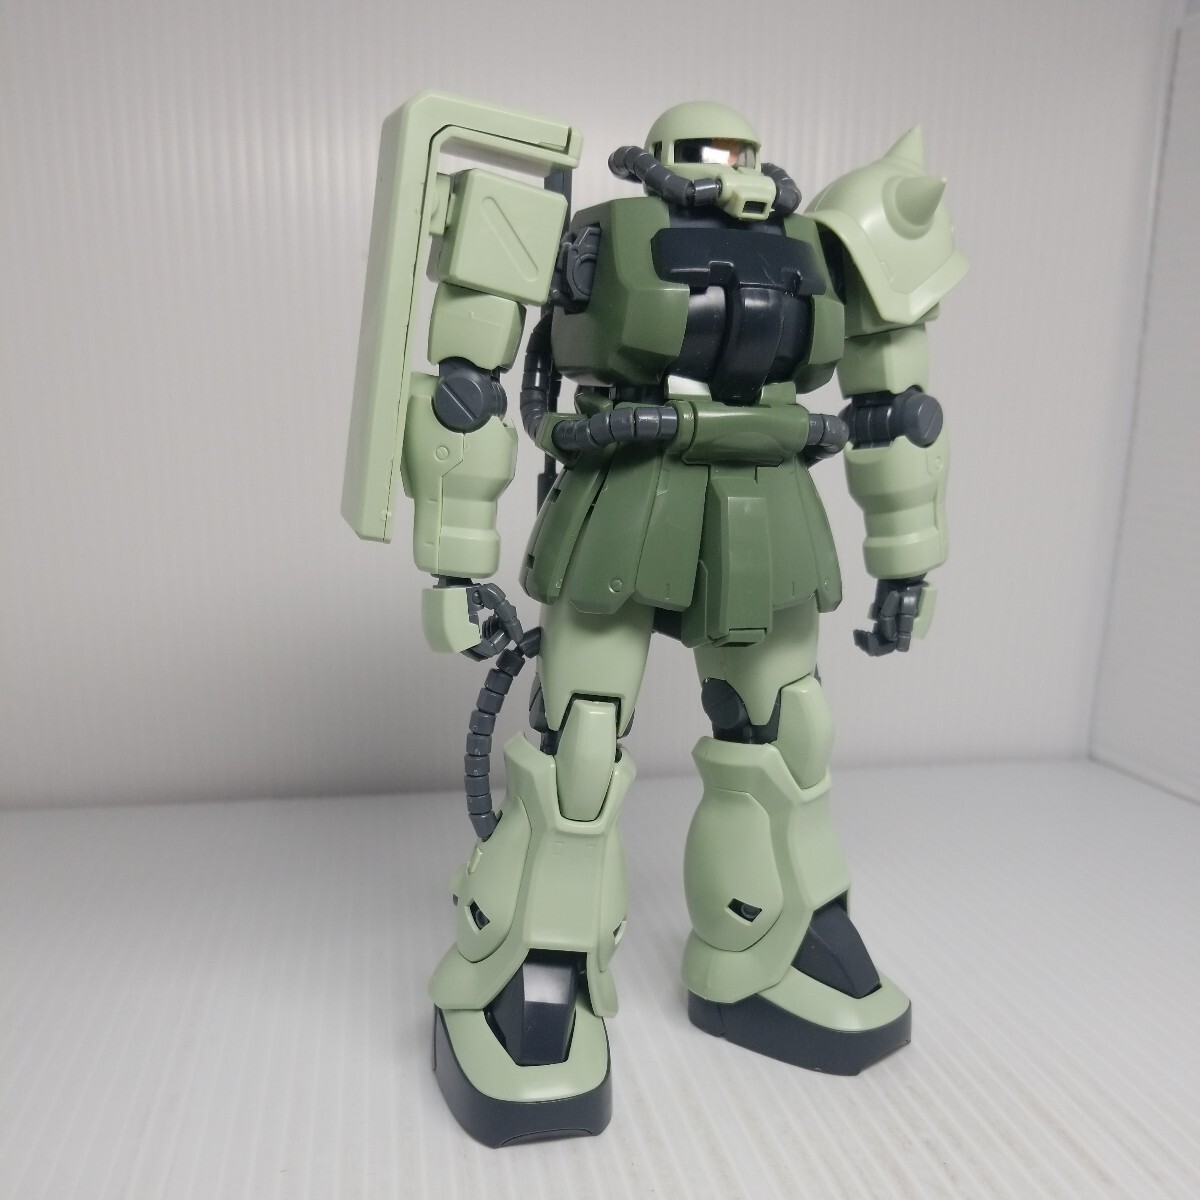 A-150g 3/26 ① MG F2 The k Gundam включение в покупку возможно gun pra Junk 